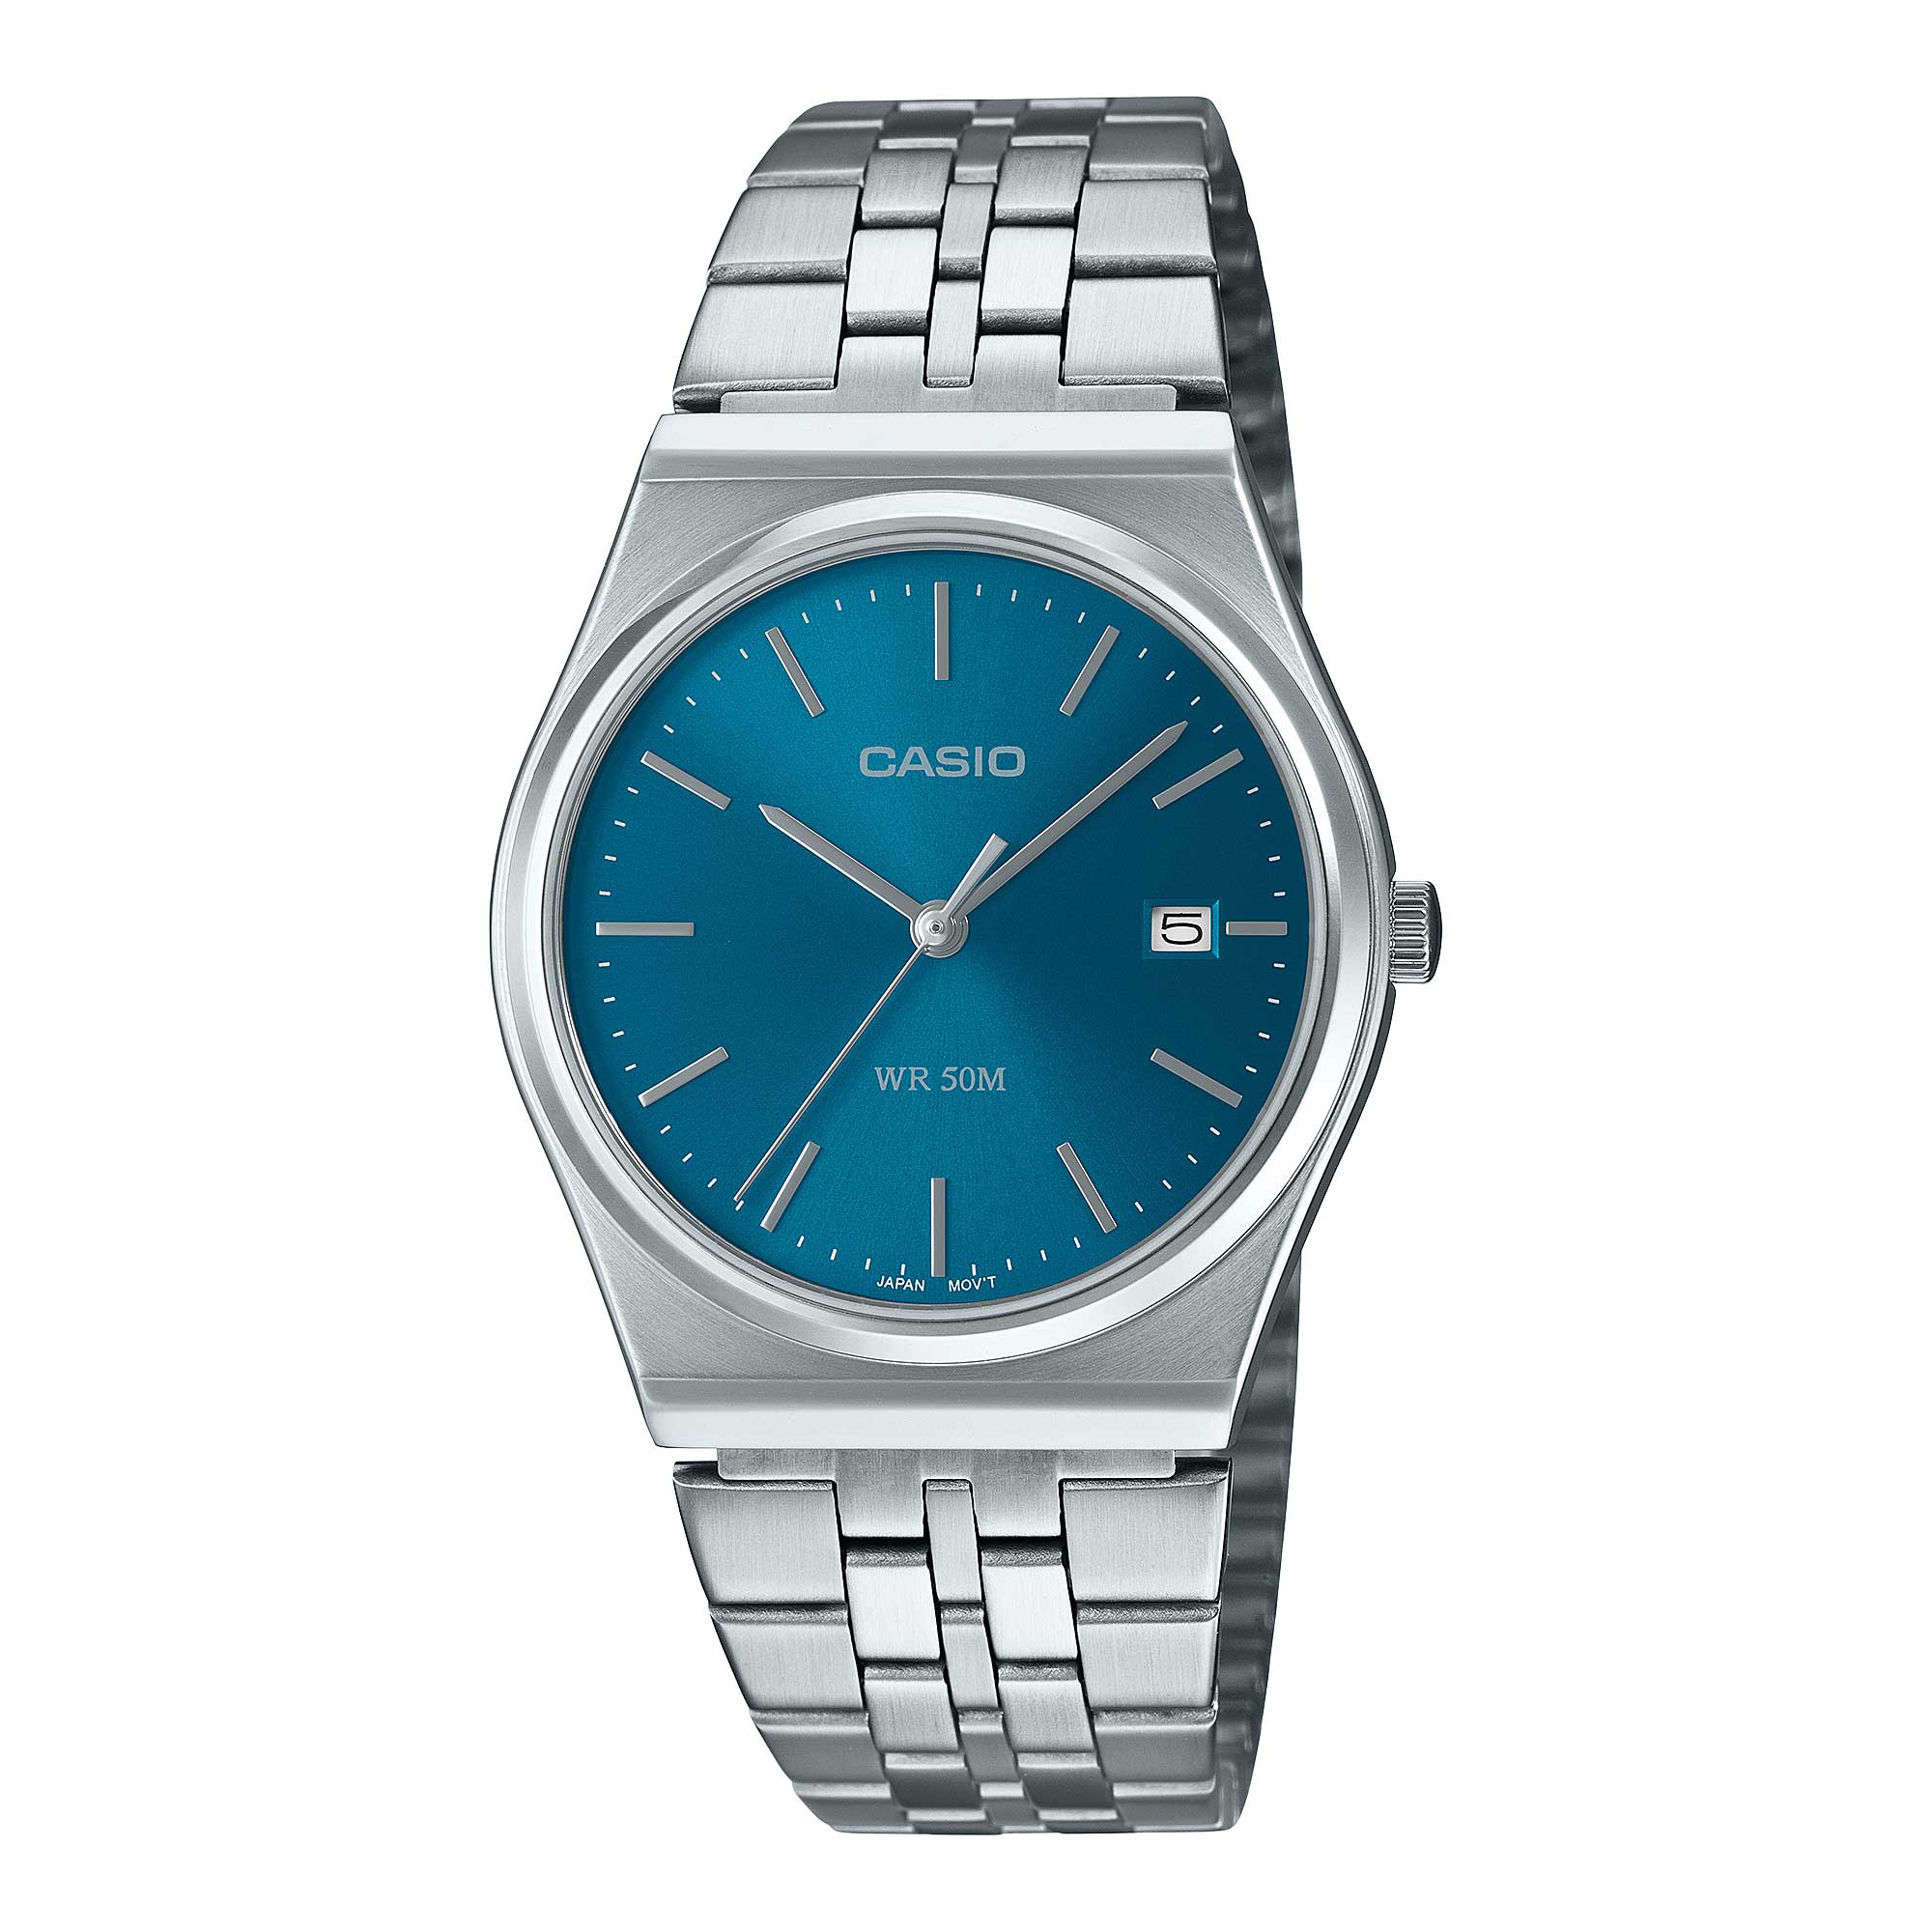 Casio Men's Analog Retro Look Minimalist Dial Watch MTPB145D-2A2 MTP-B145D-2A2